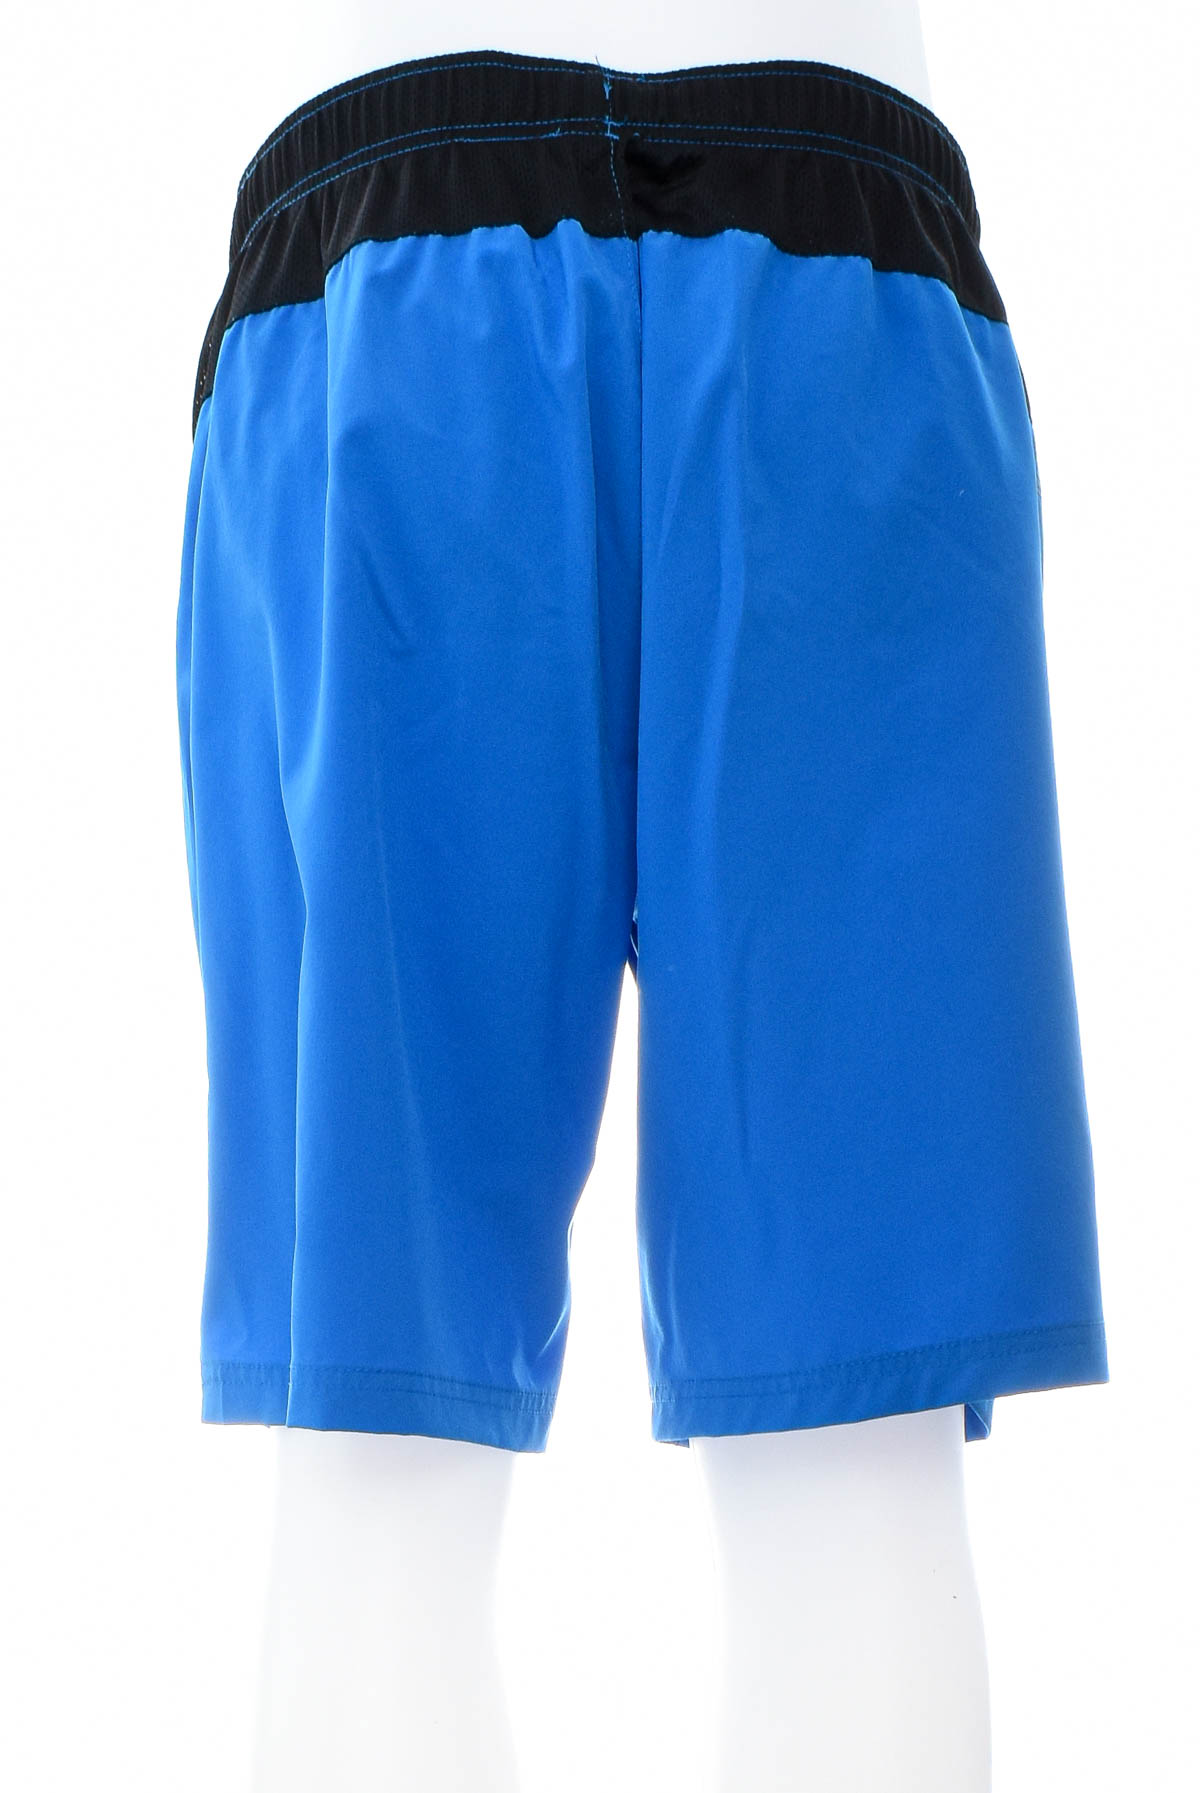 Men's shorts - Demix - 1